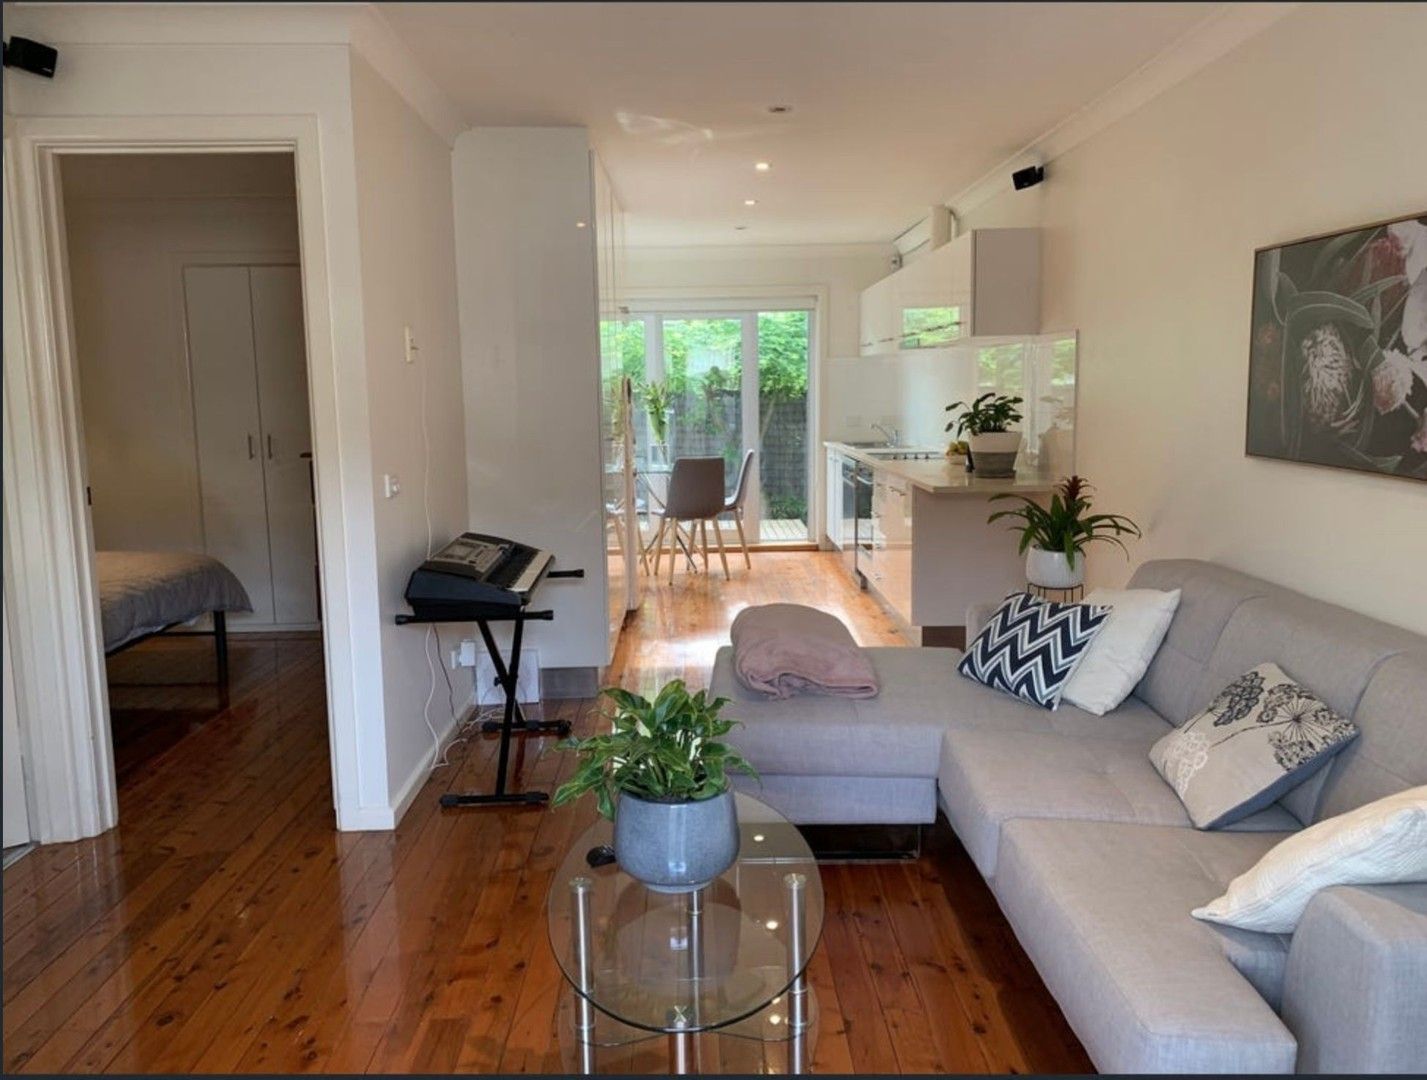 2 bedrooms Apartment / Unit / Flat in  ALBURY NSW, 2640